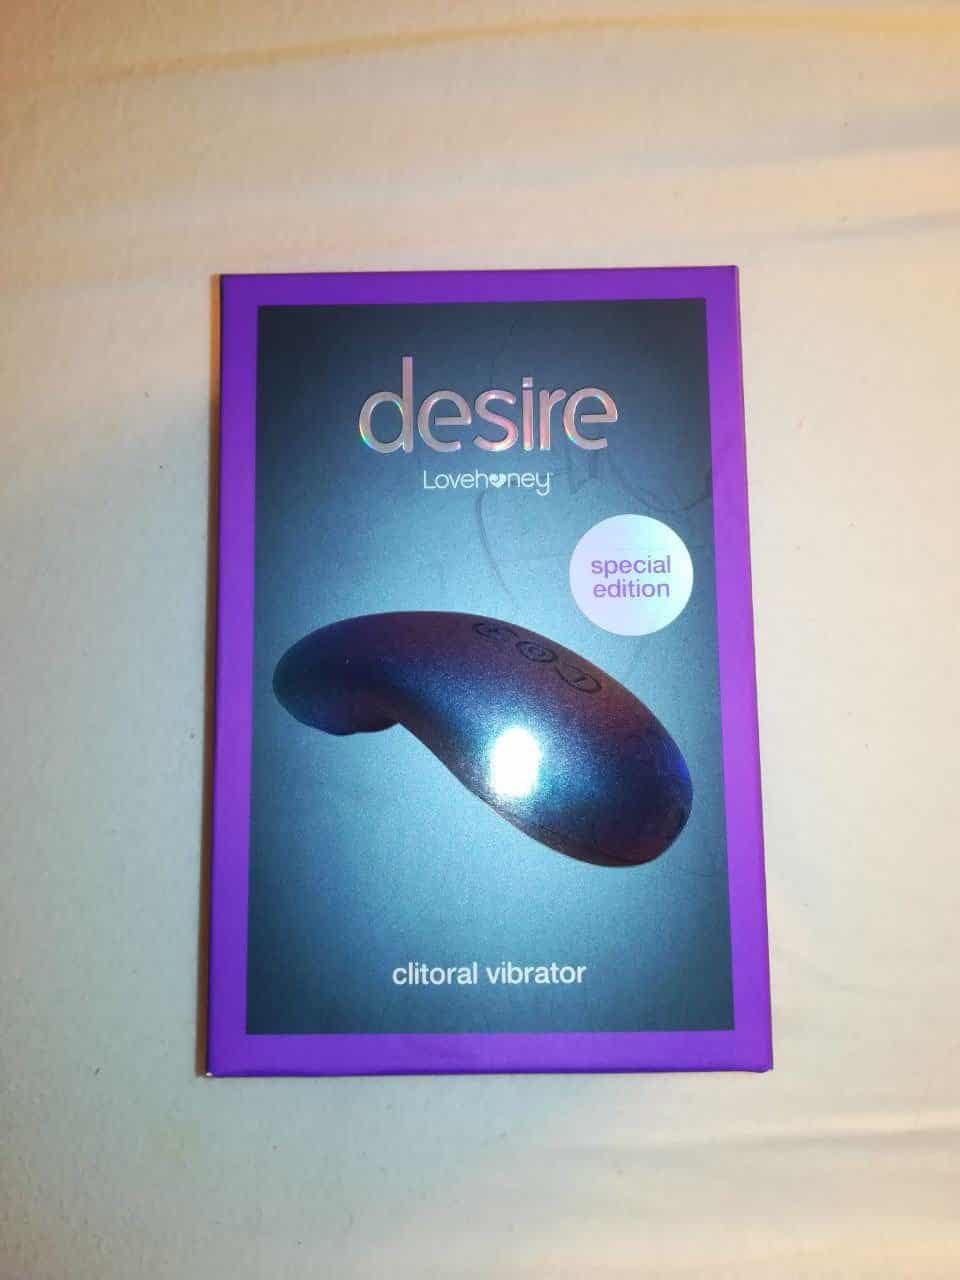 Desire gew KlitorisVIB - Verpackung